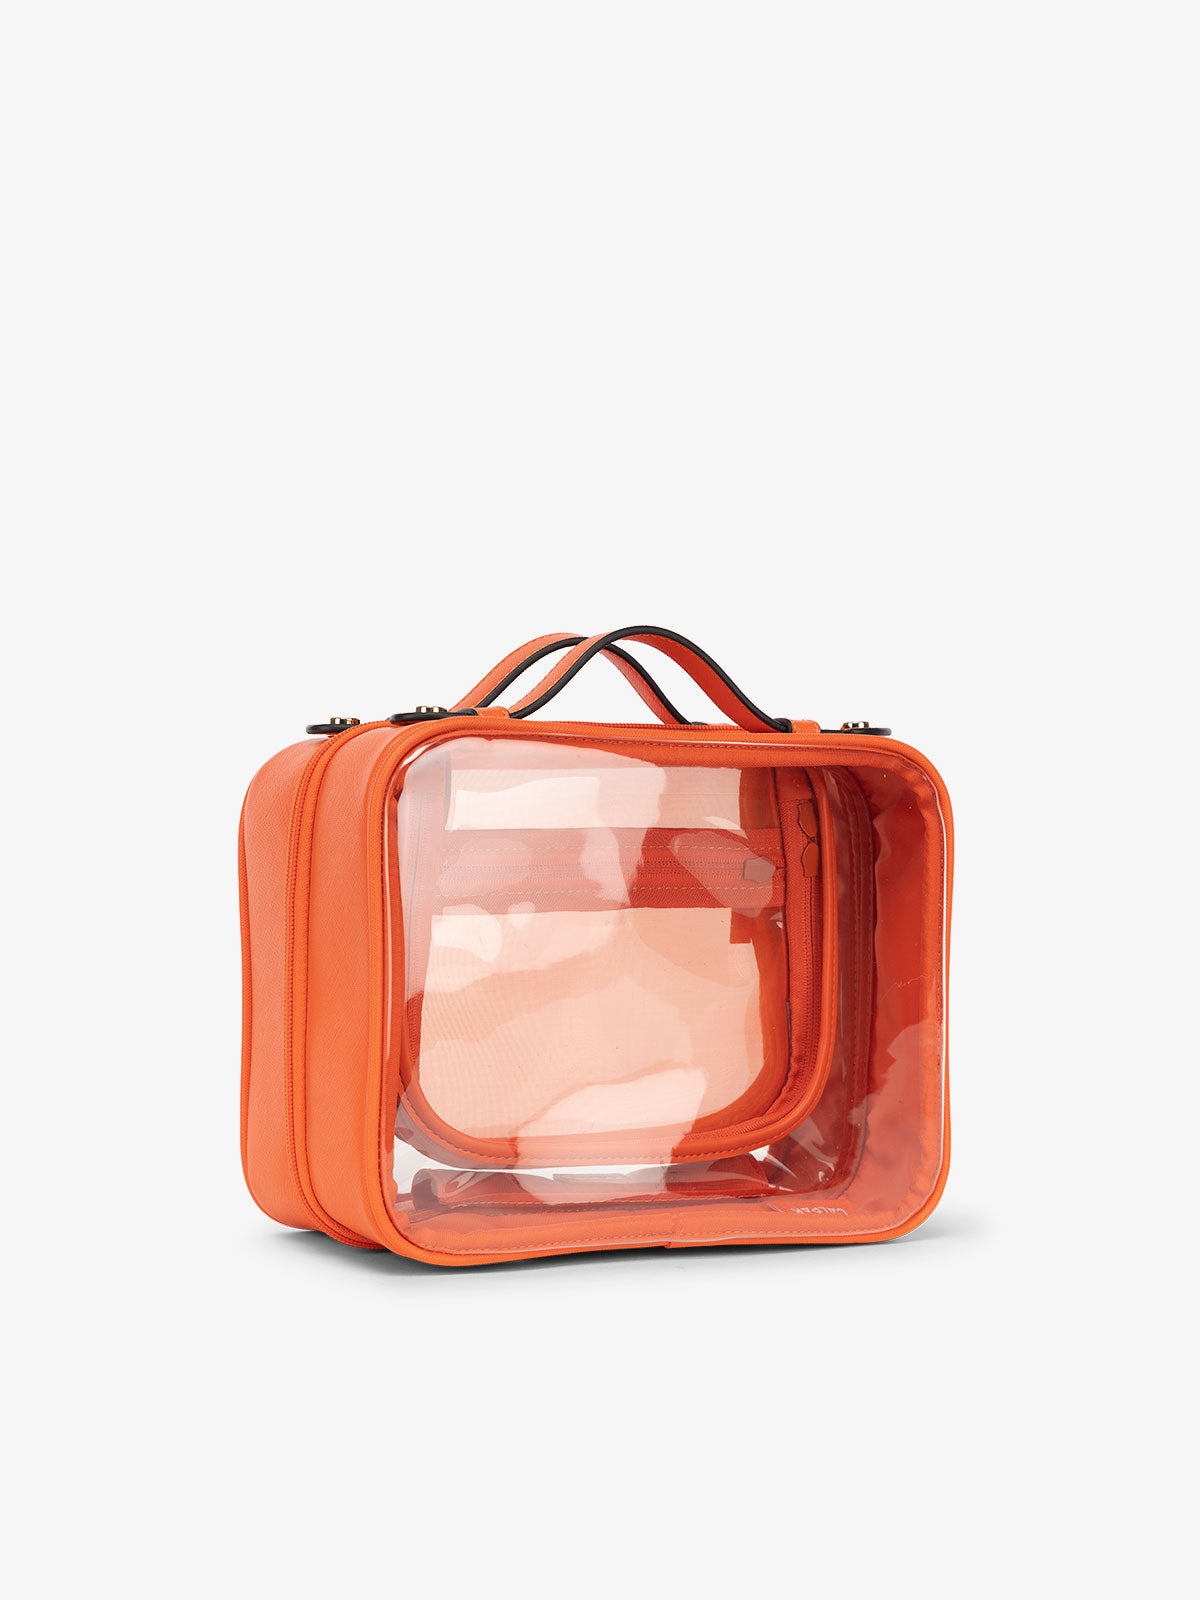 CALPAK medium clear cosmetics case with sturdy handles in  papaya orange